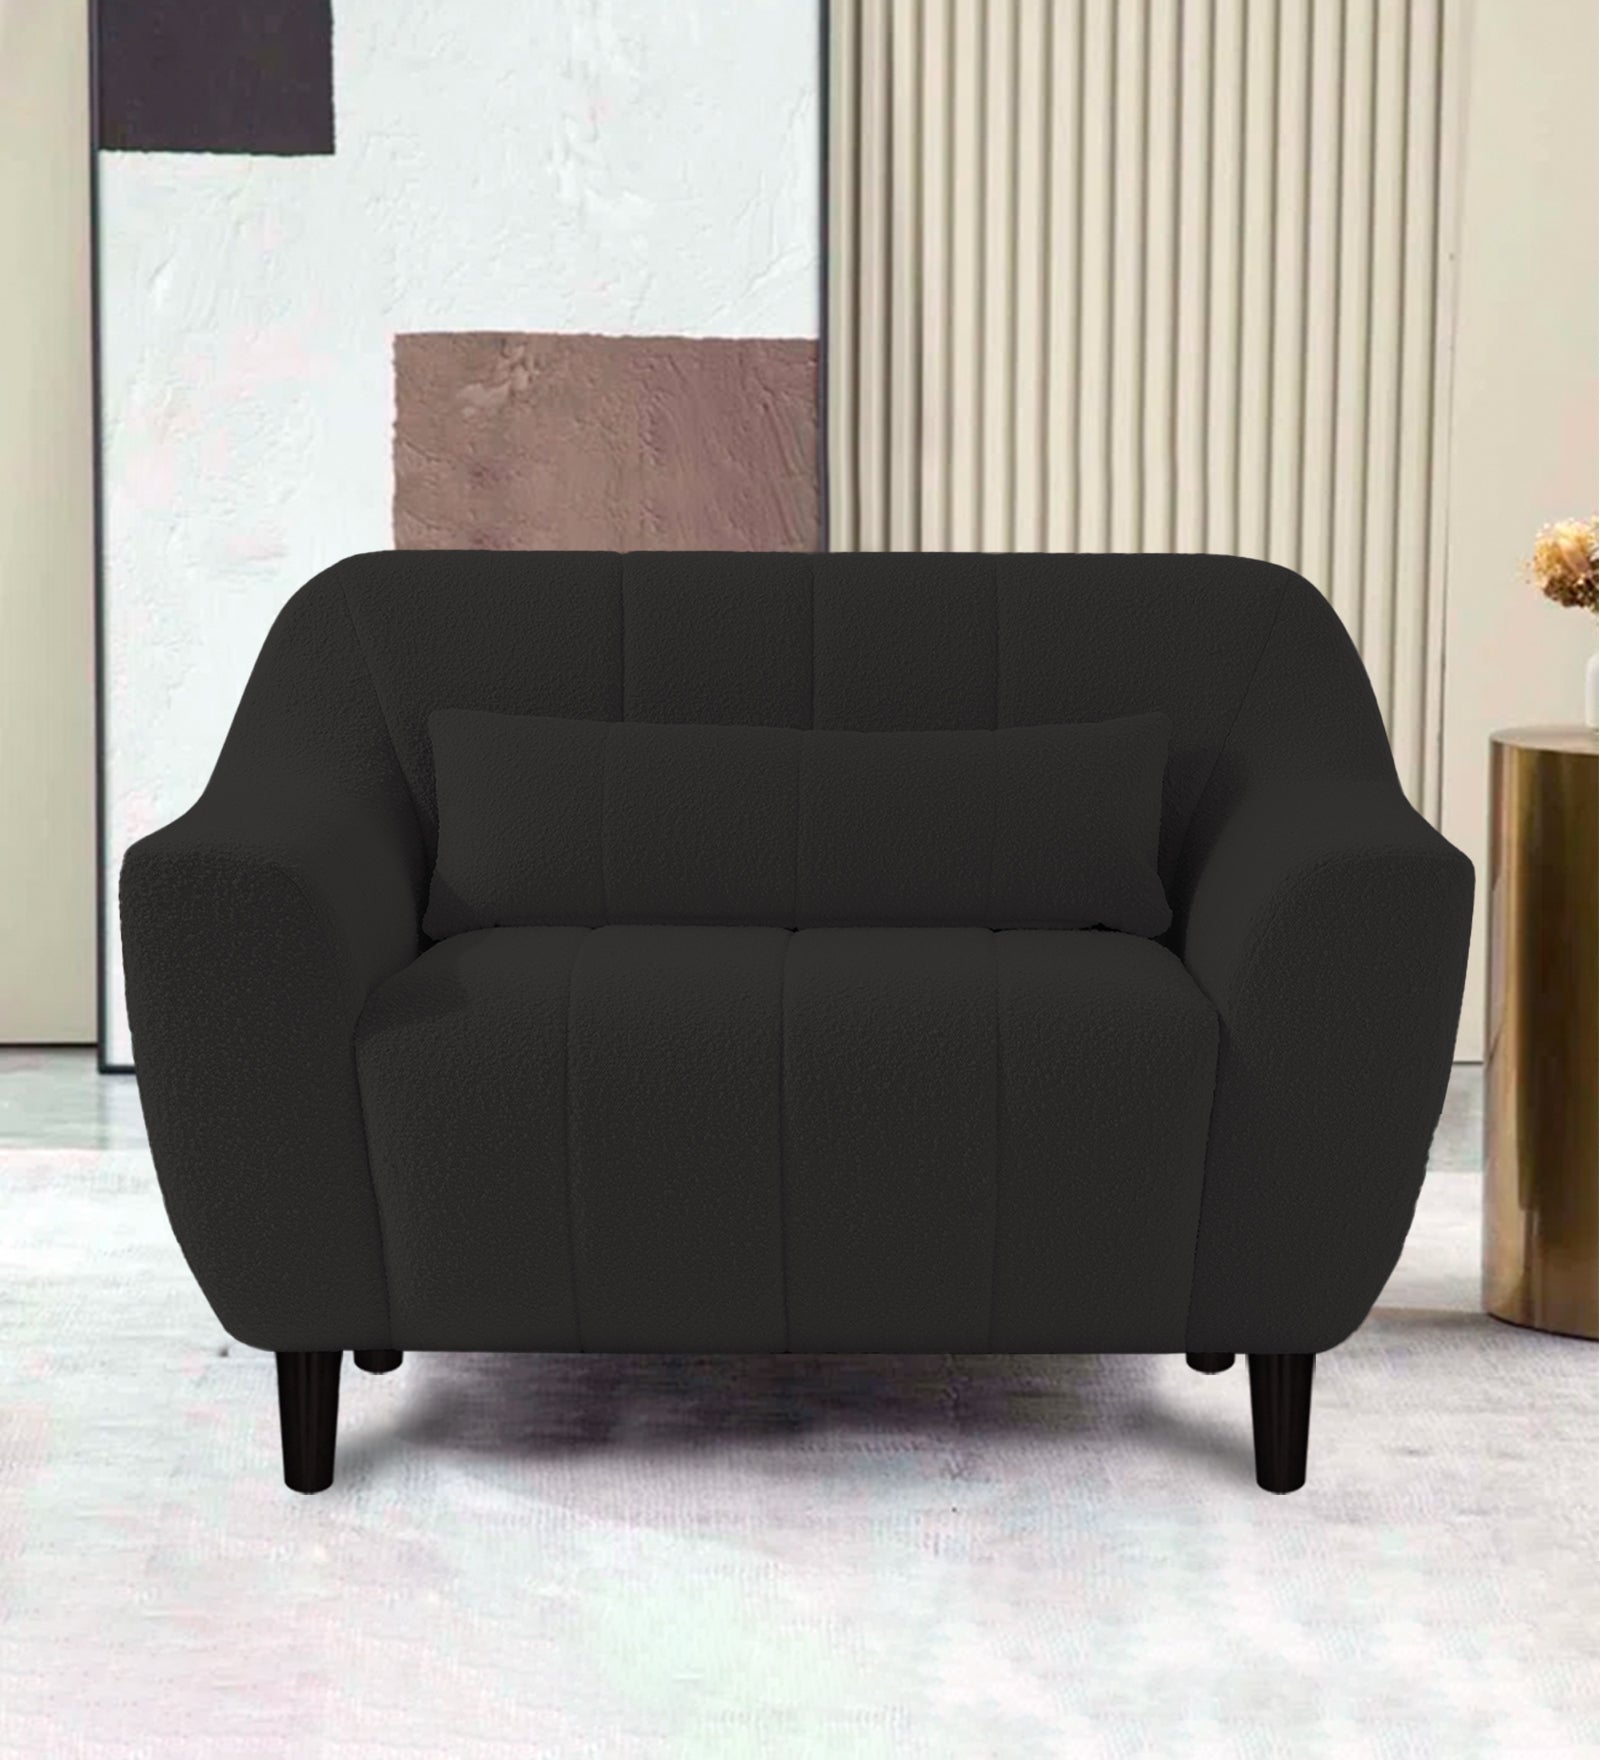 Nesco Fur Fabric 1 Seater Sofa in Cloud Grey Colour